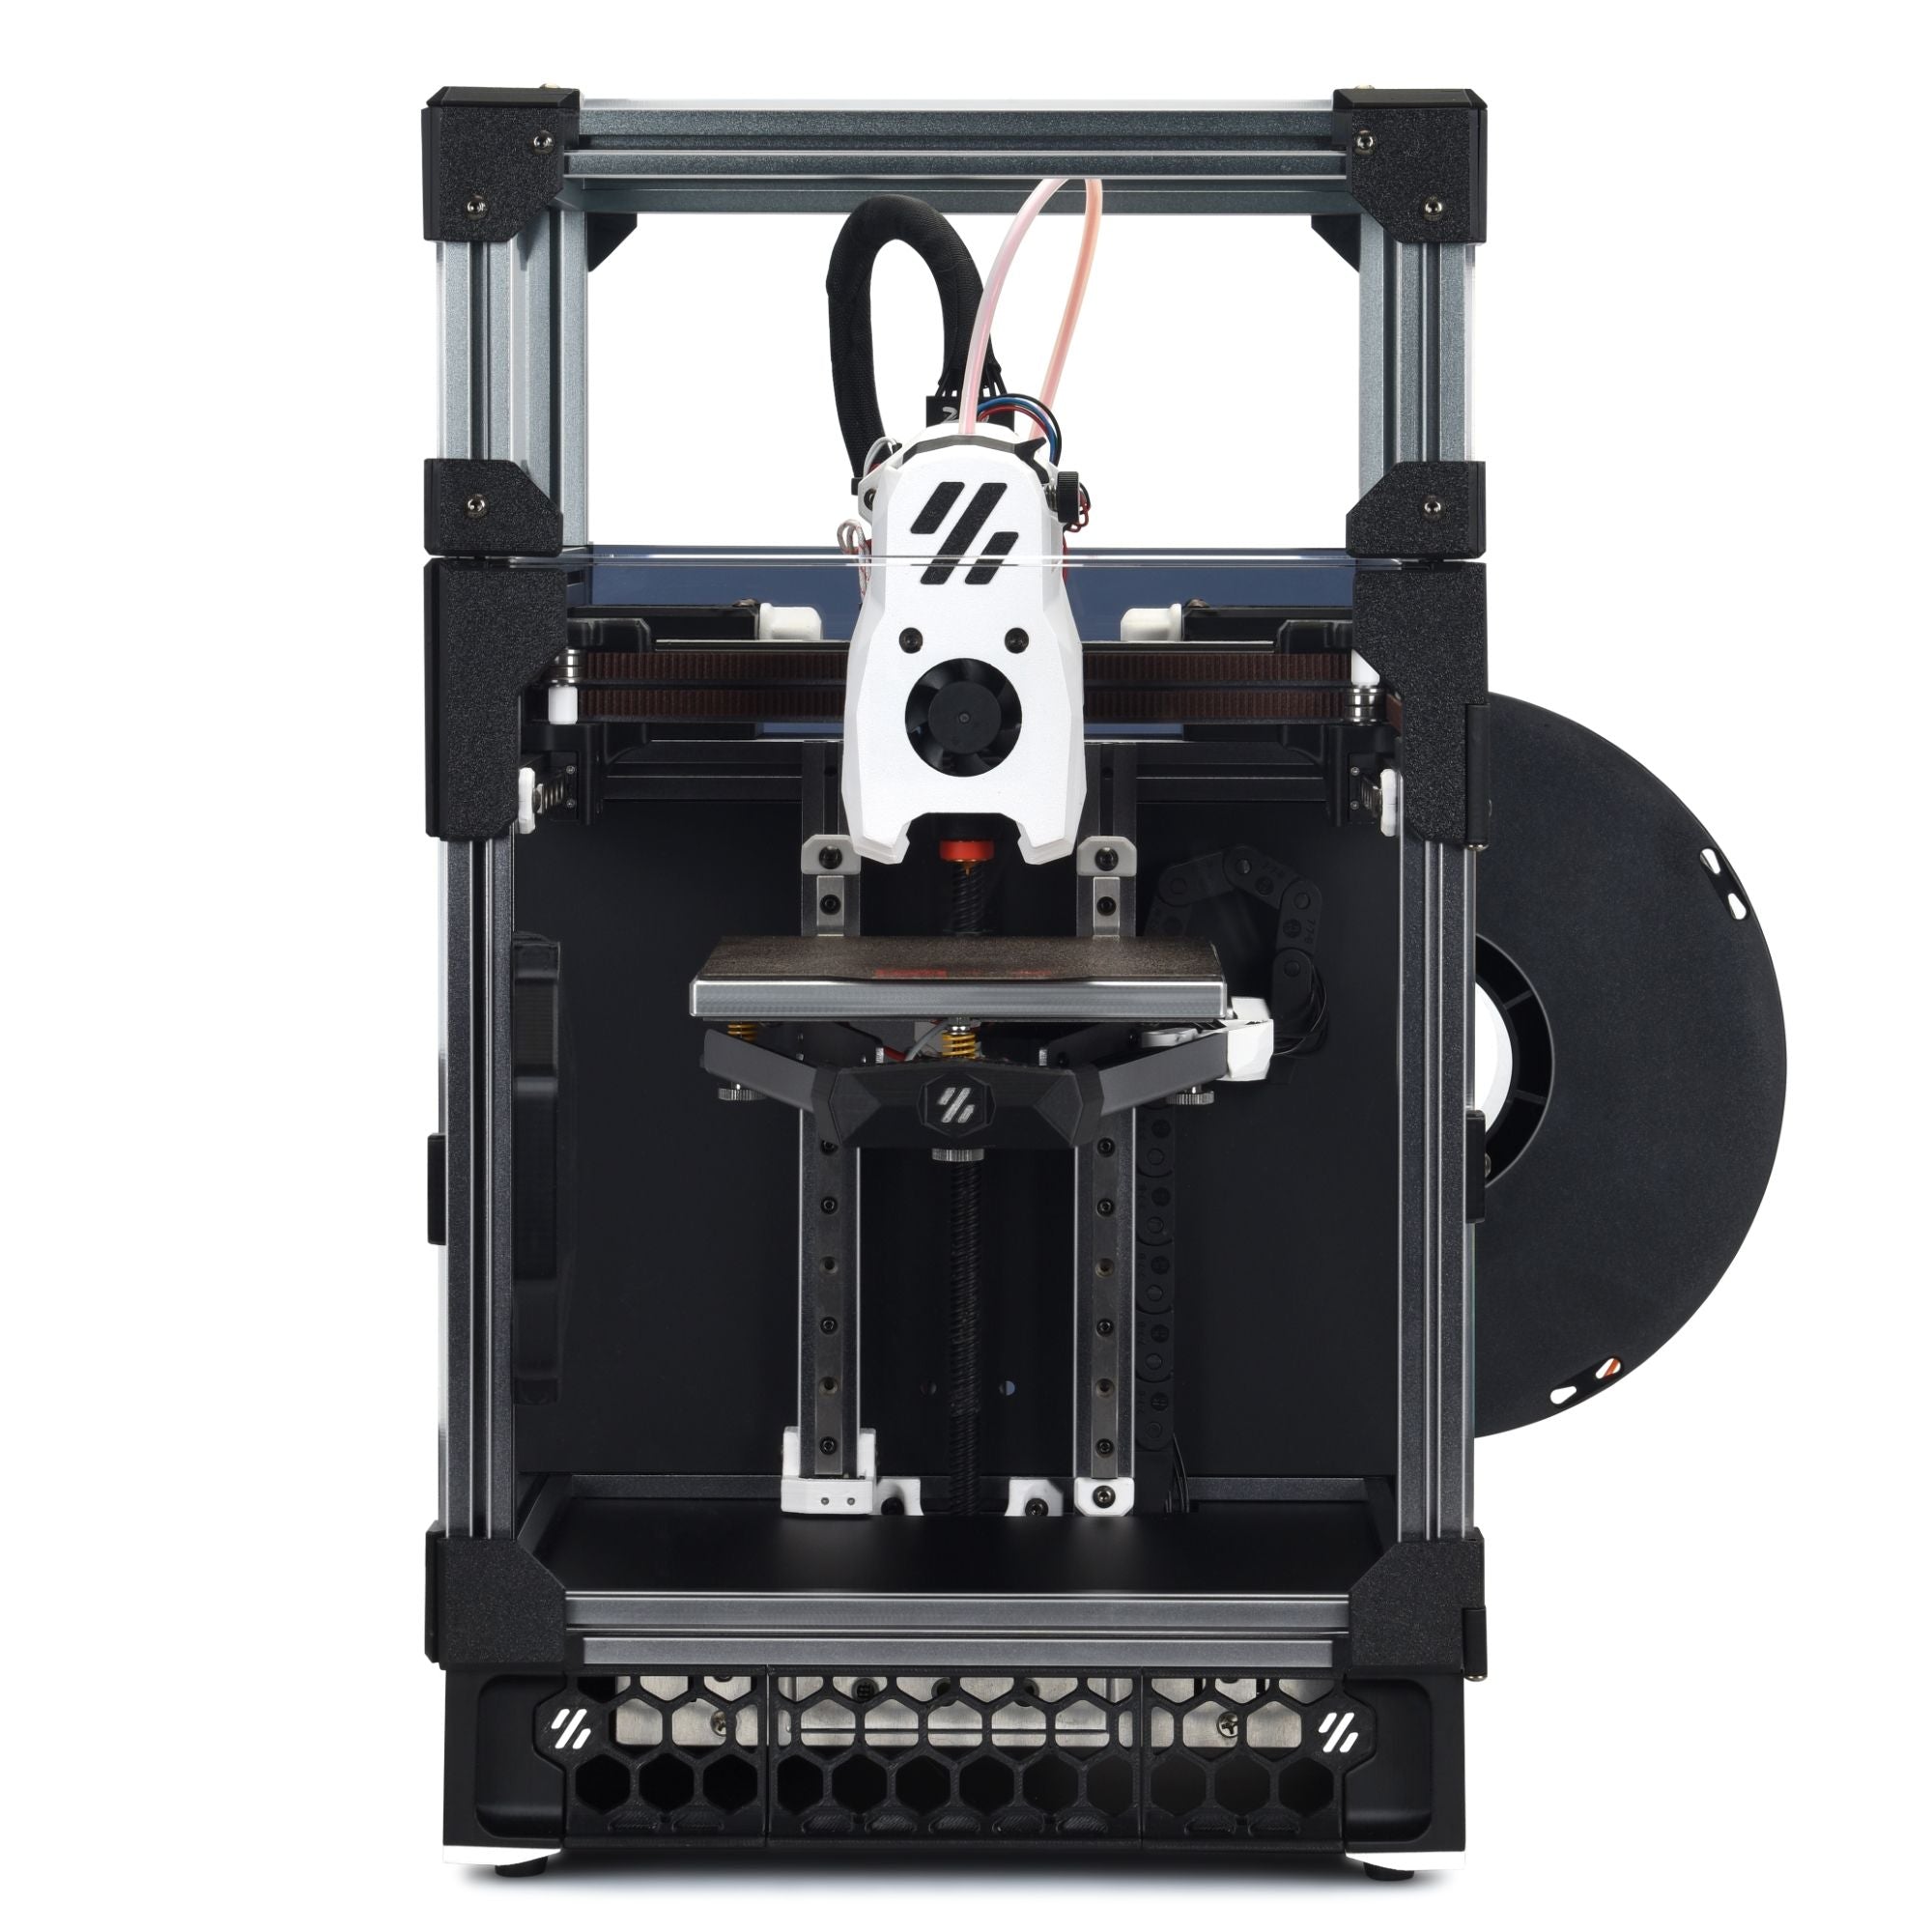 LDO Voron V0.2-S1 A+ 3D Printer Kit